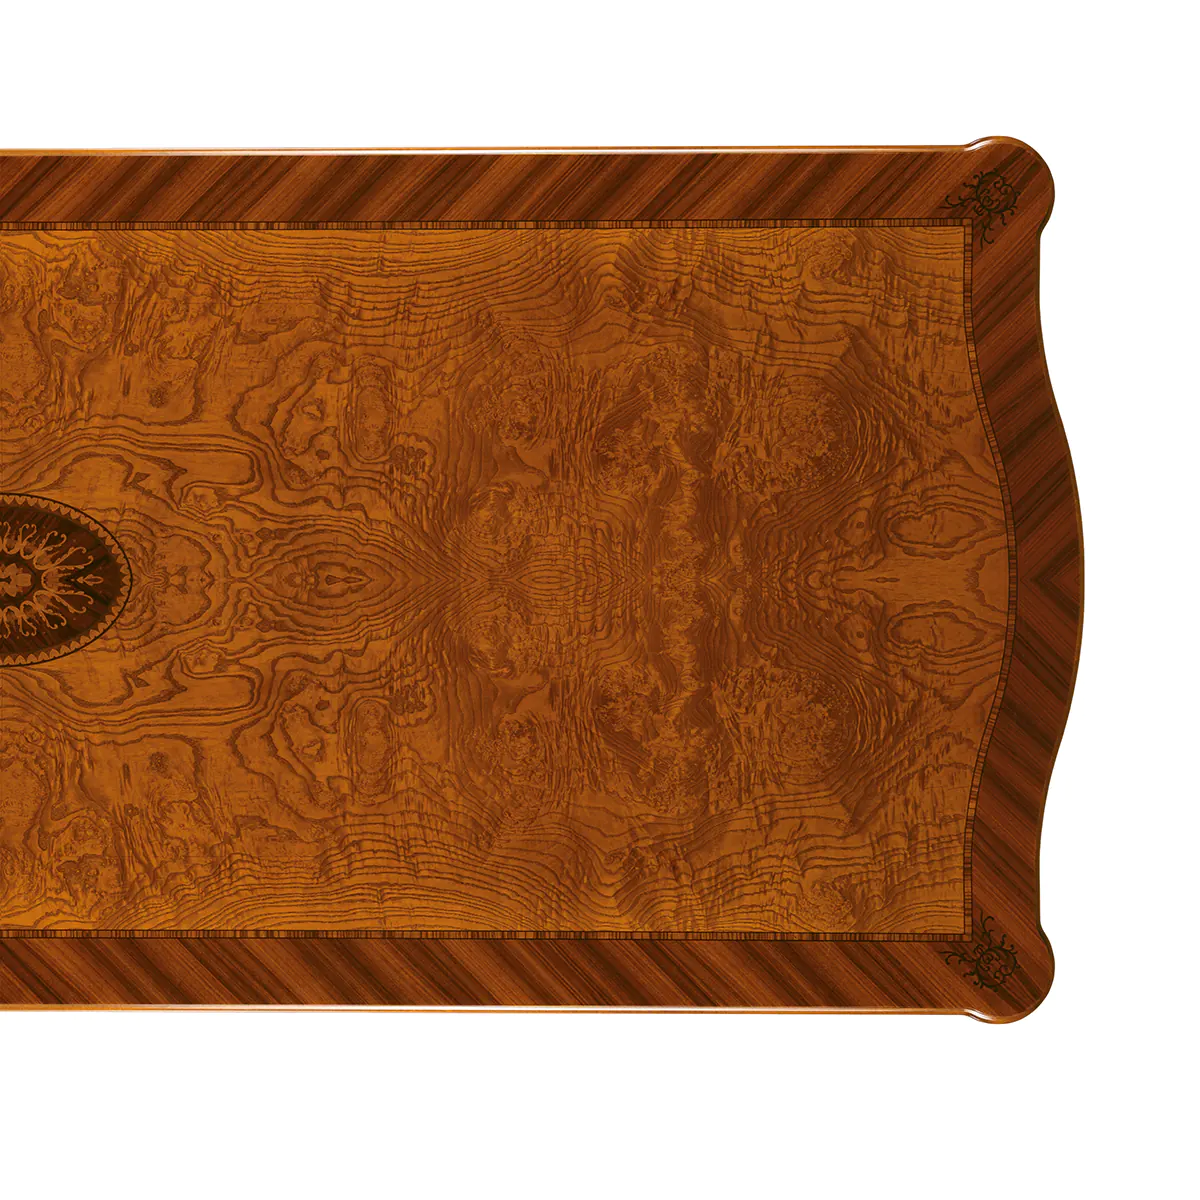 Magnum rectangular table with 2 pedestals